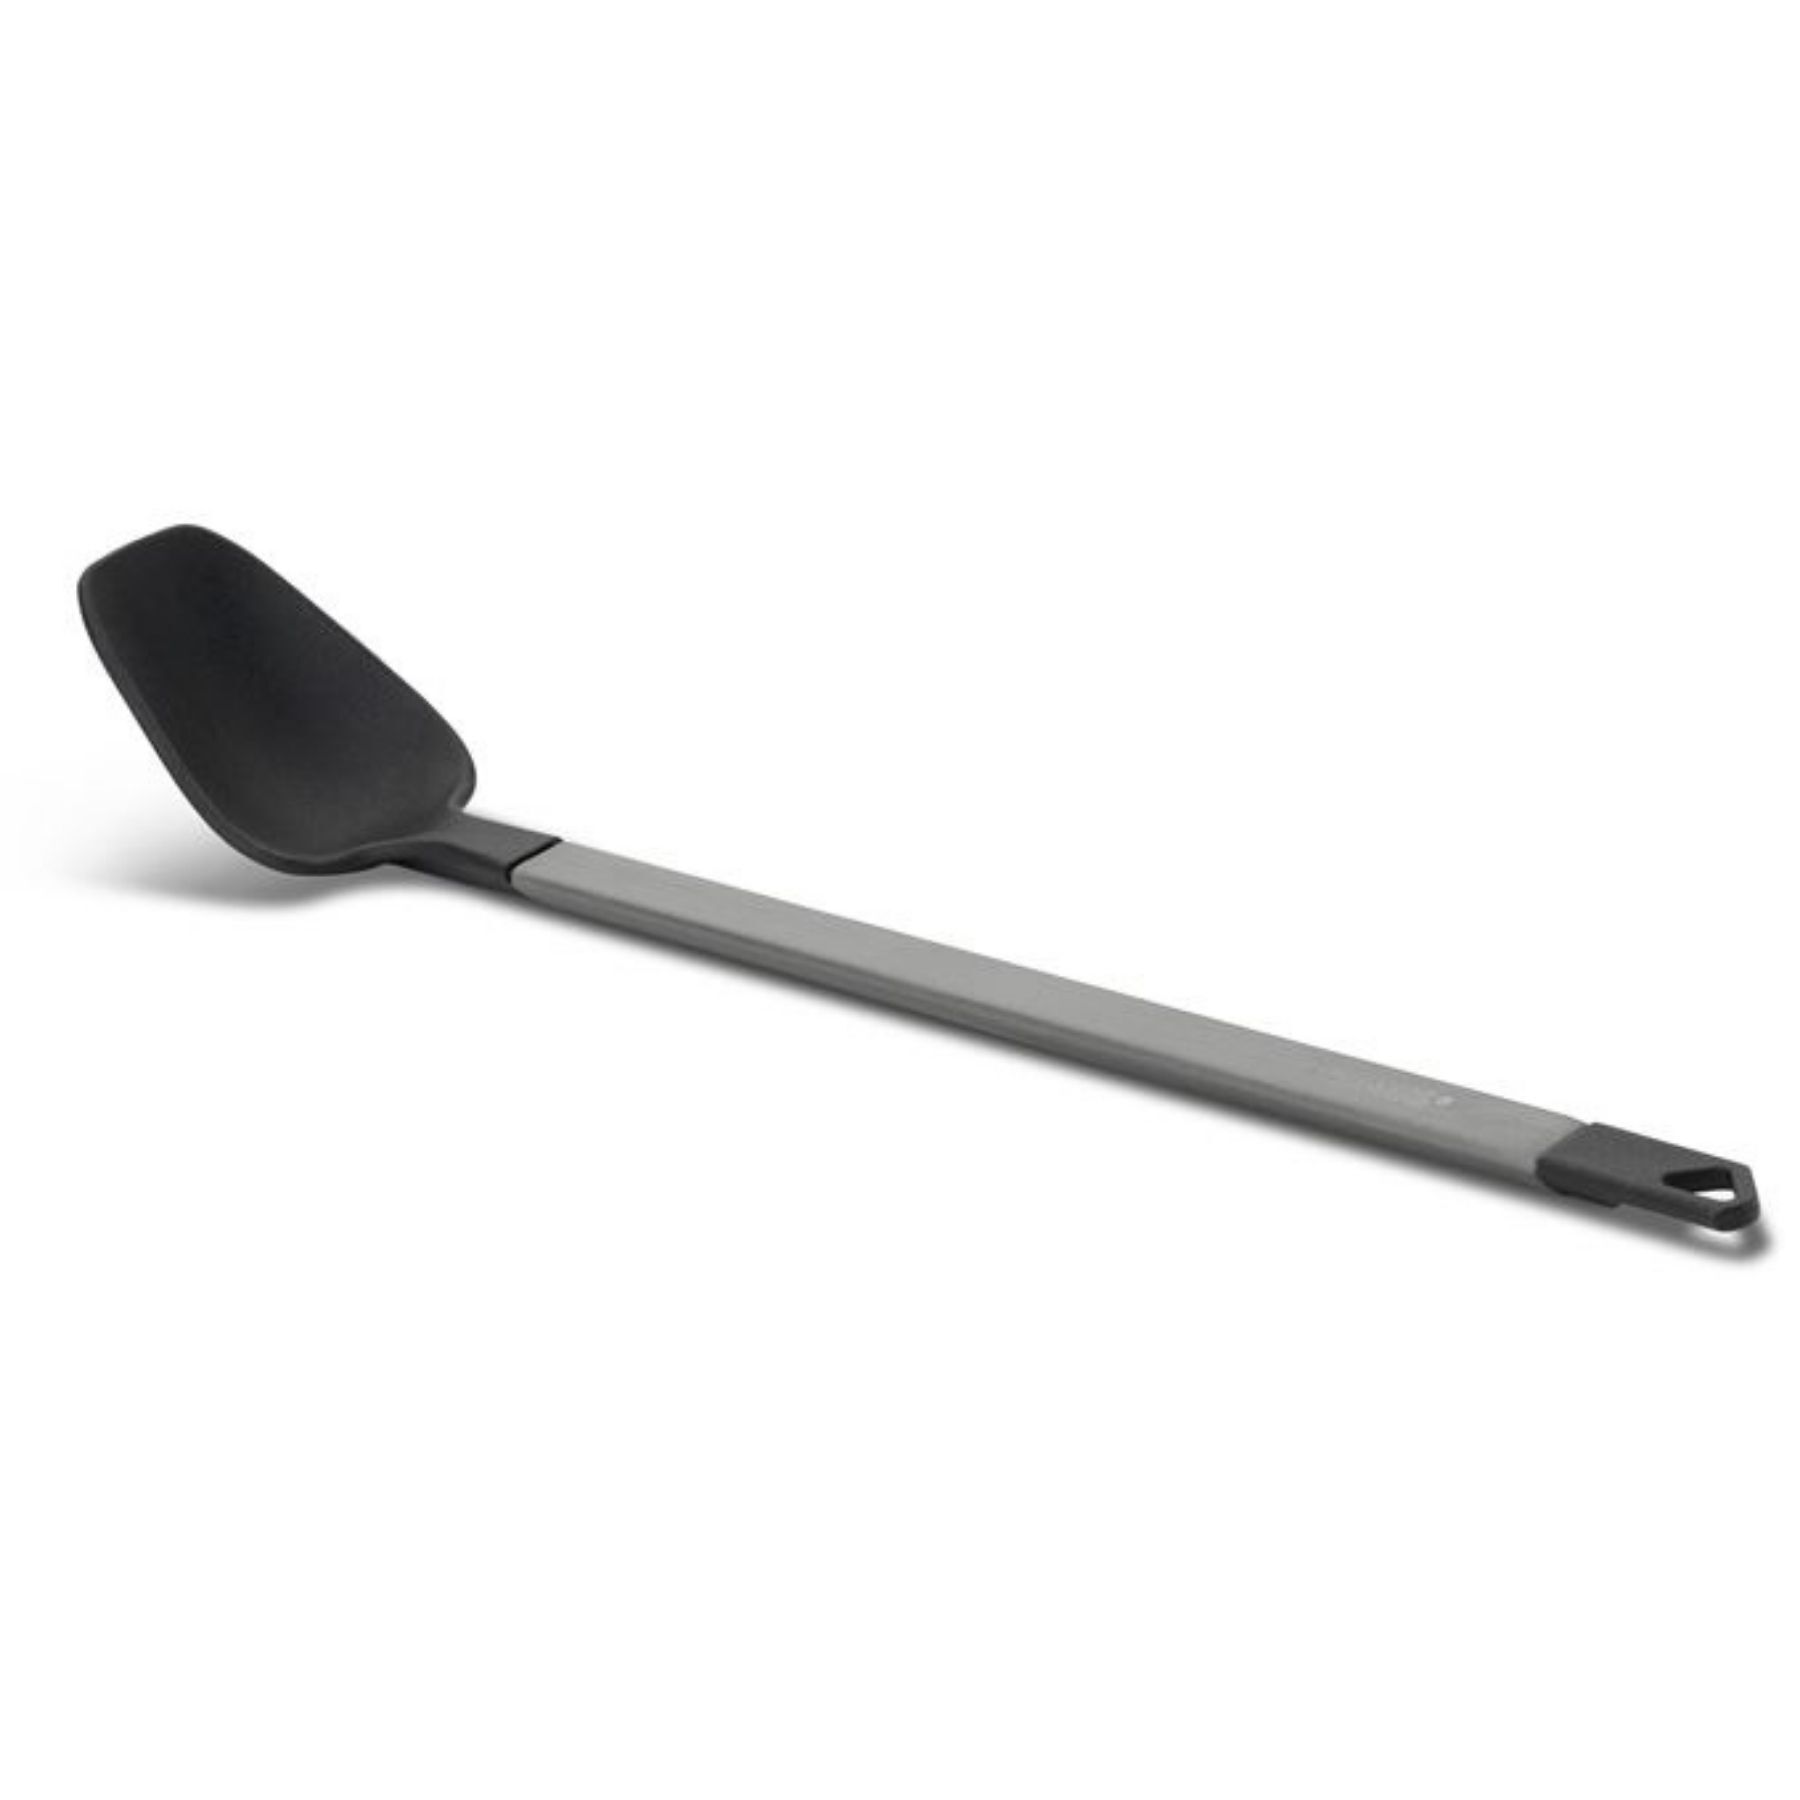 Primus Longspoon - Cutlery